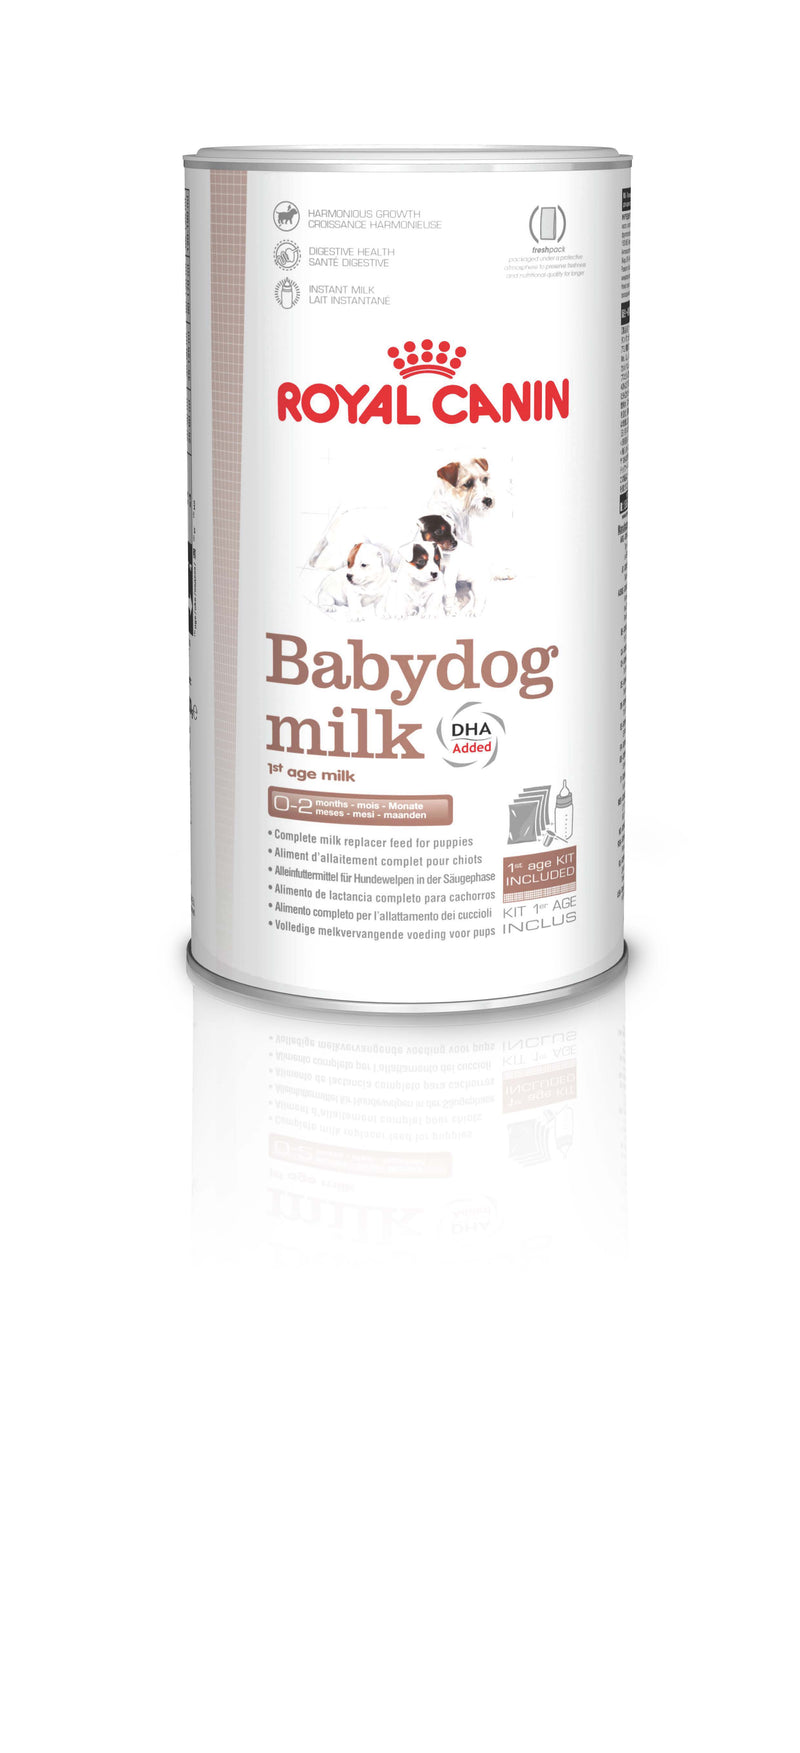 Royal Canin Babydog Milk, 400g x 8 Pack